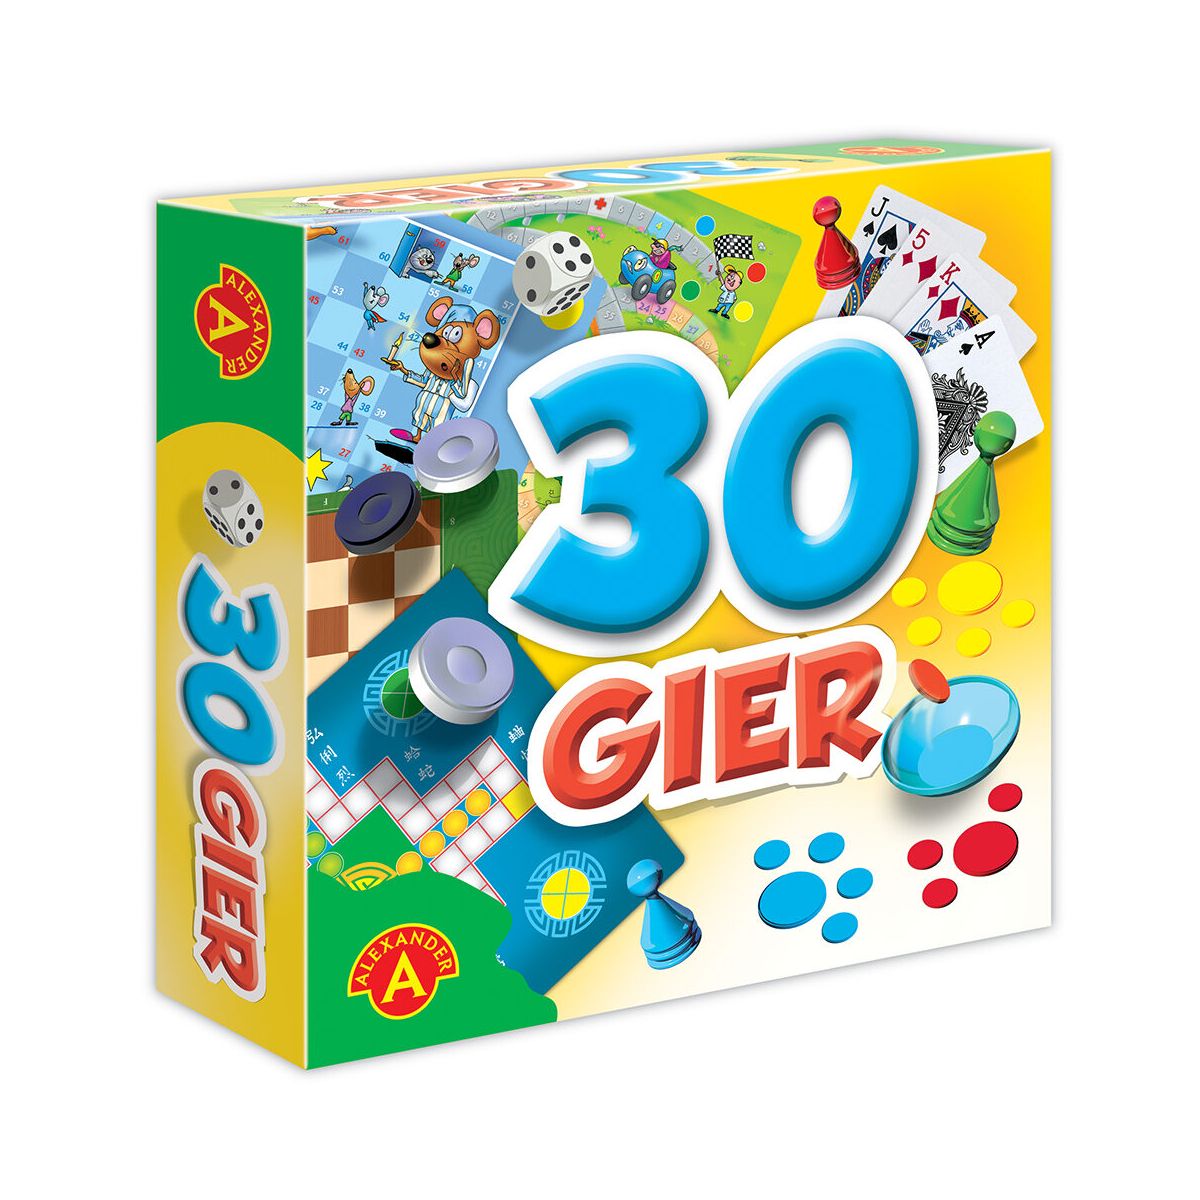 Gra edukacyjna Alexander 30 gier